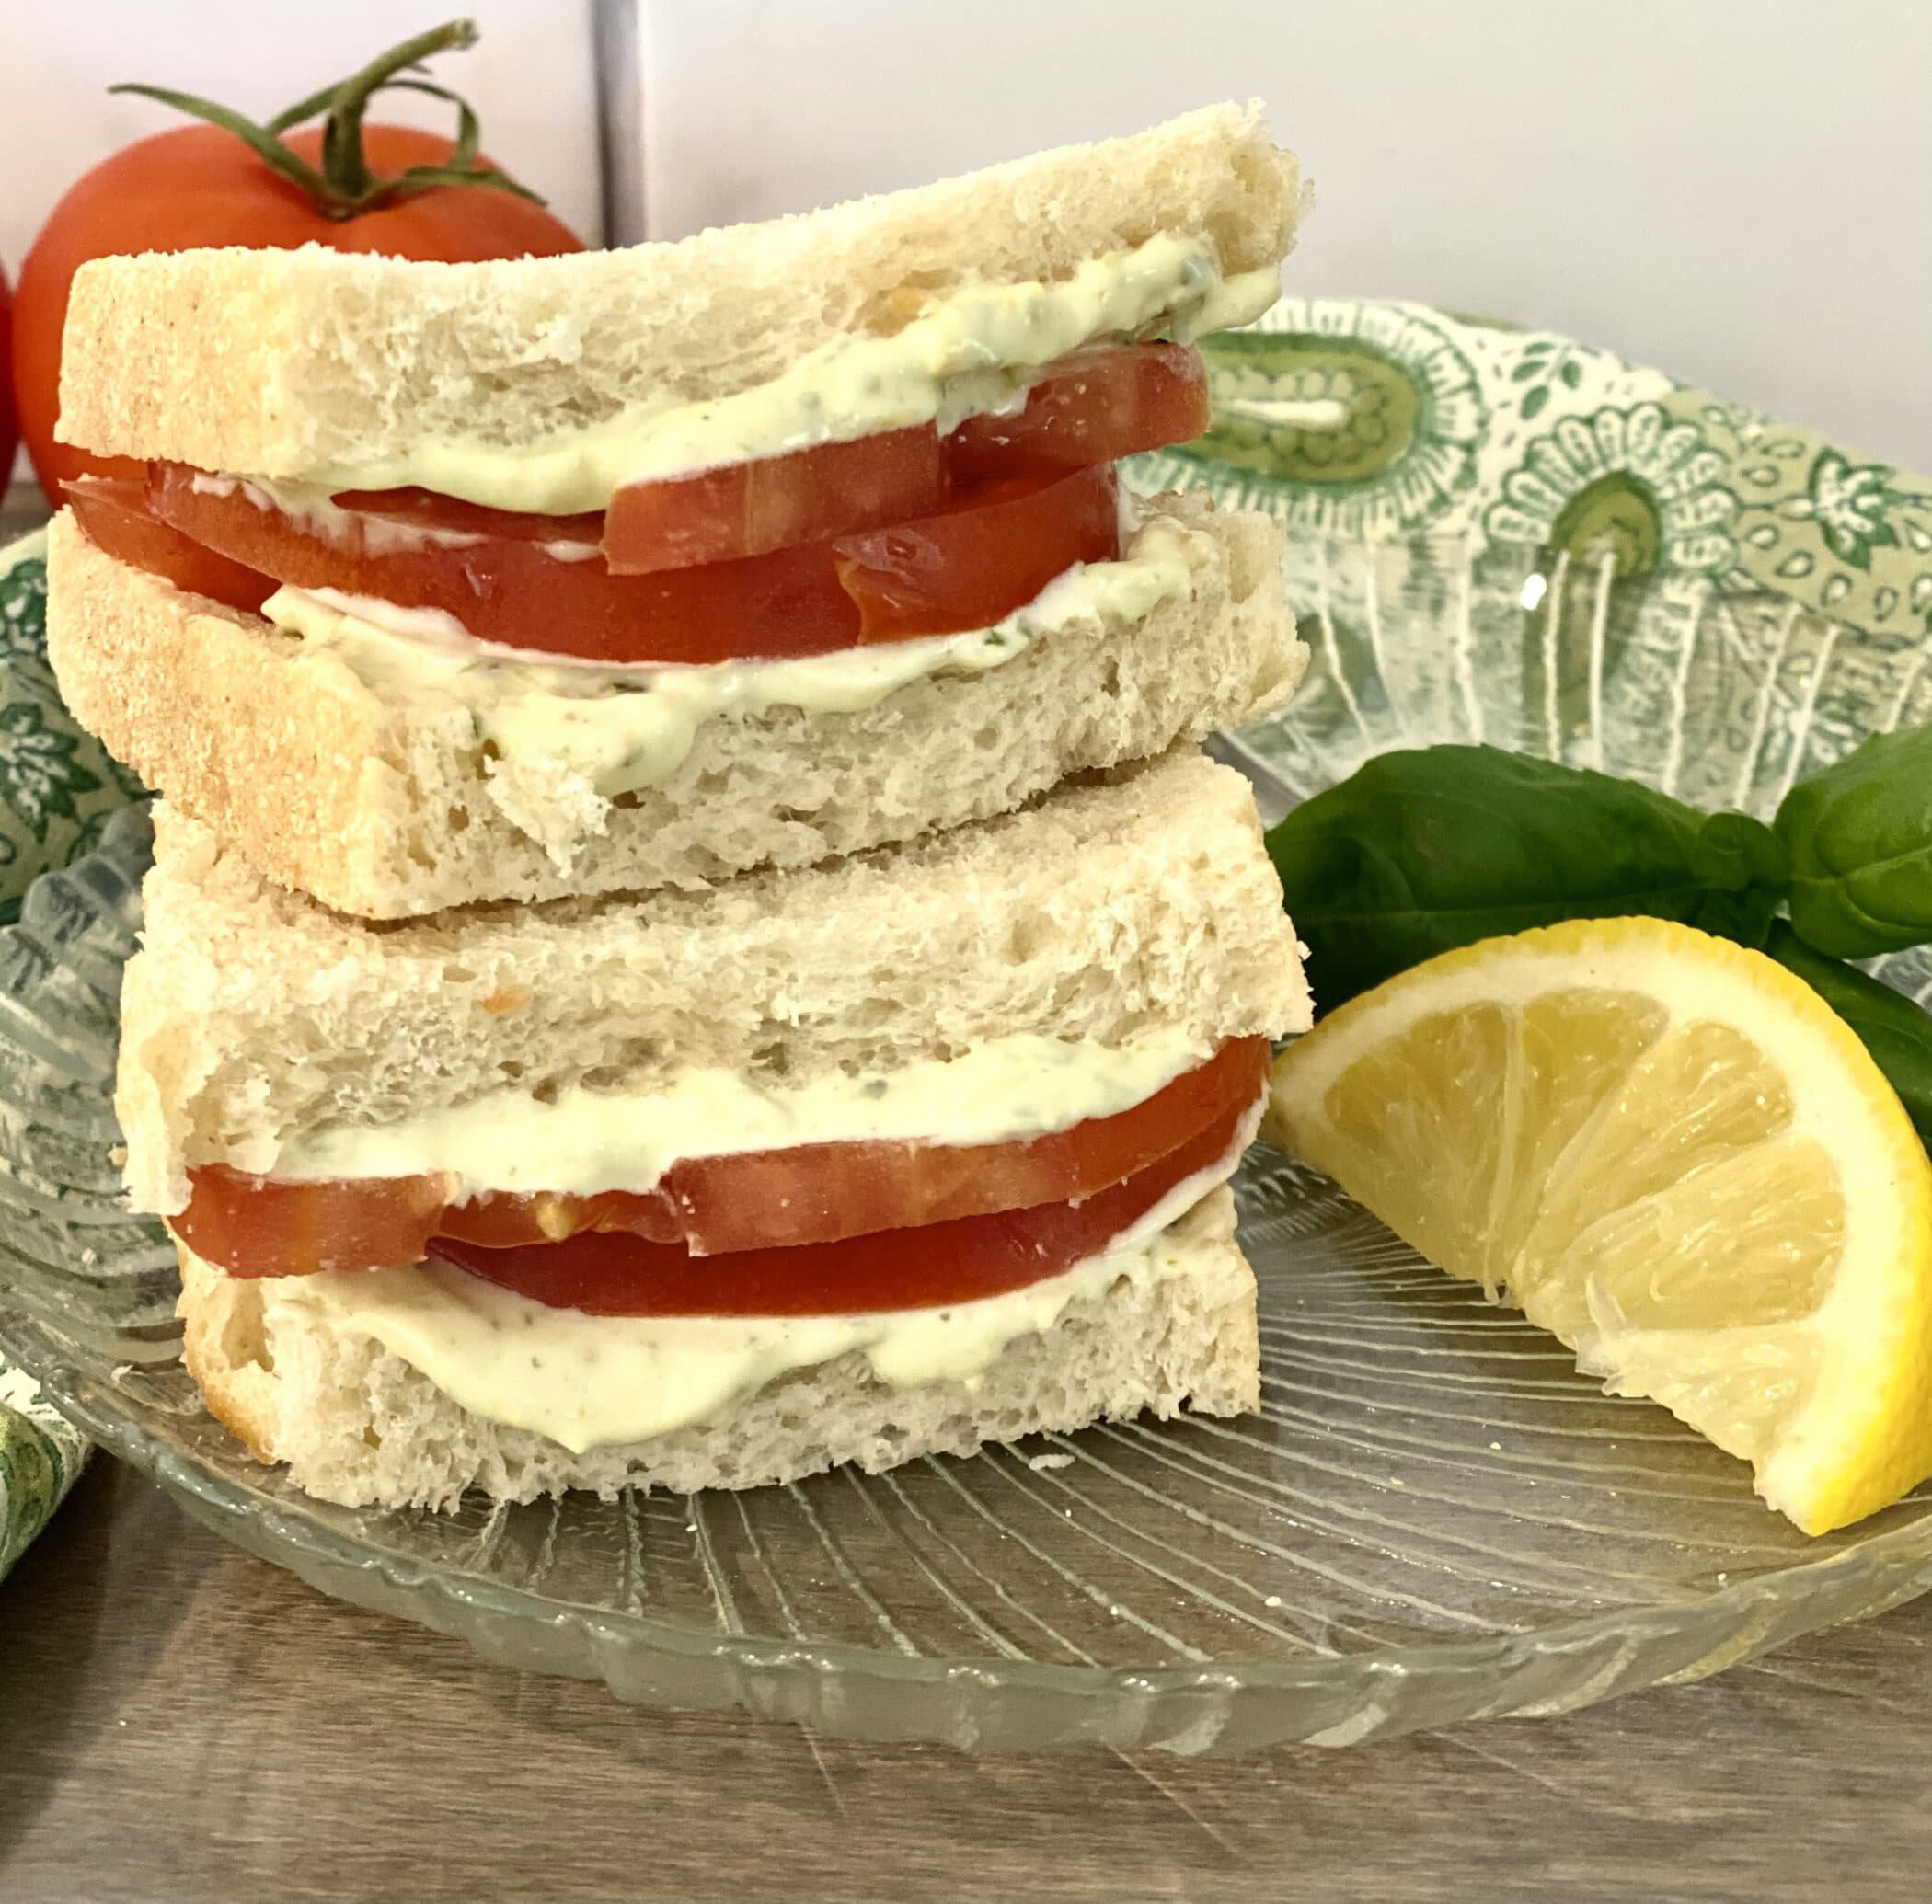 tomato sandwich with pesto mayo